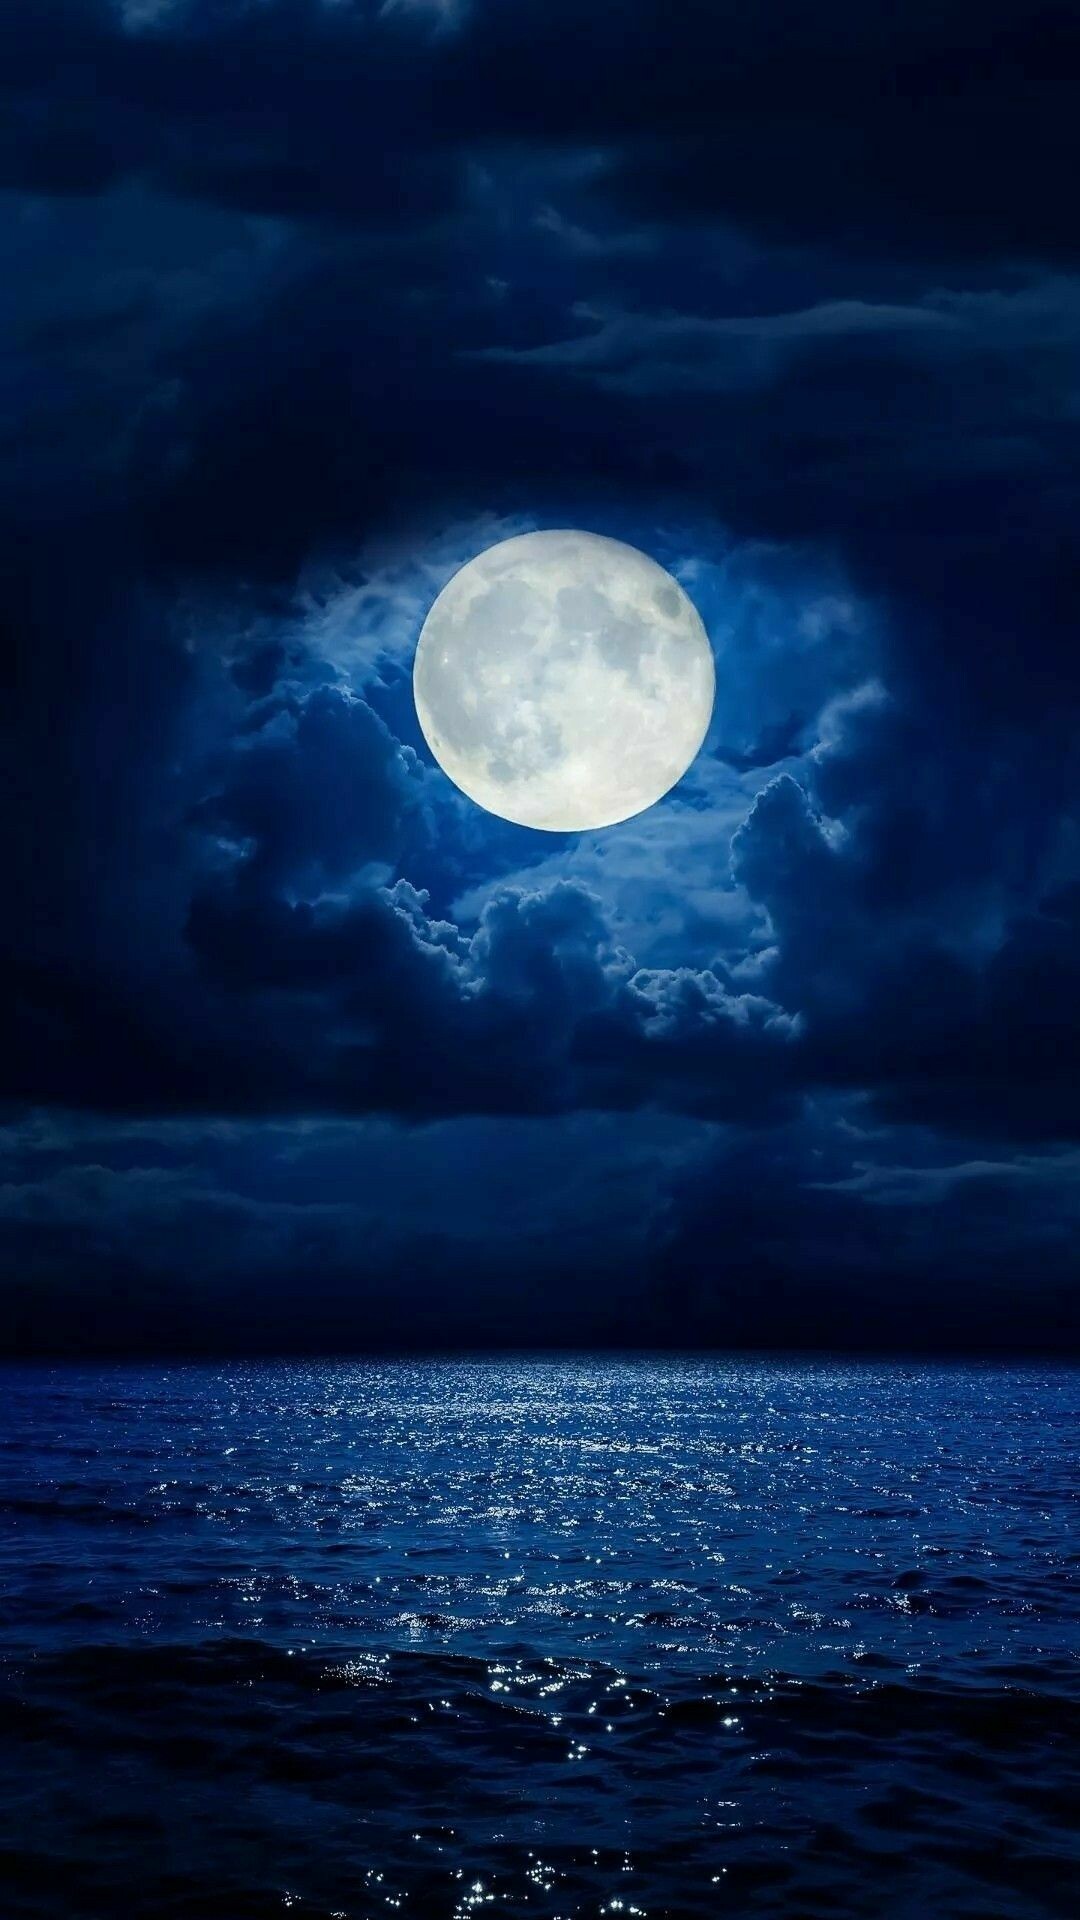 Moon: Darkening skies, The broad expanse of water reflecting the moonlight, Atmospheric phenomena. 1080x1920 Full HD Wallpaper.